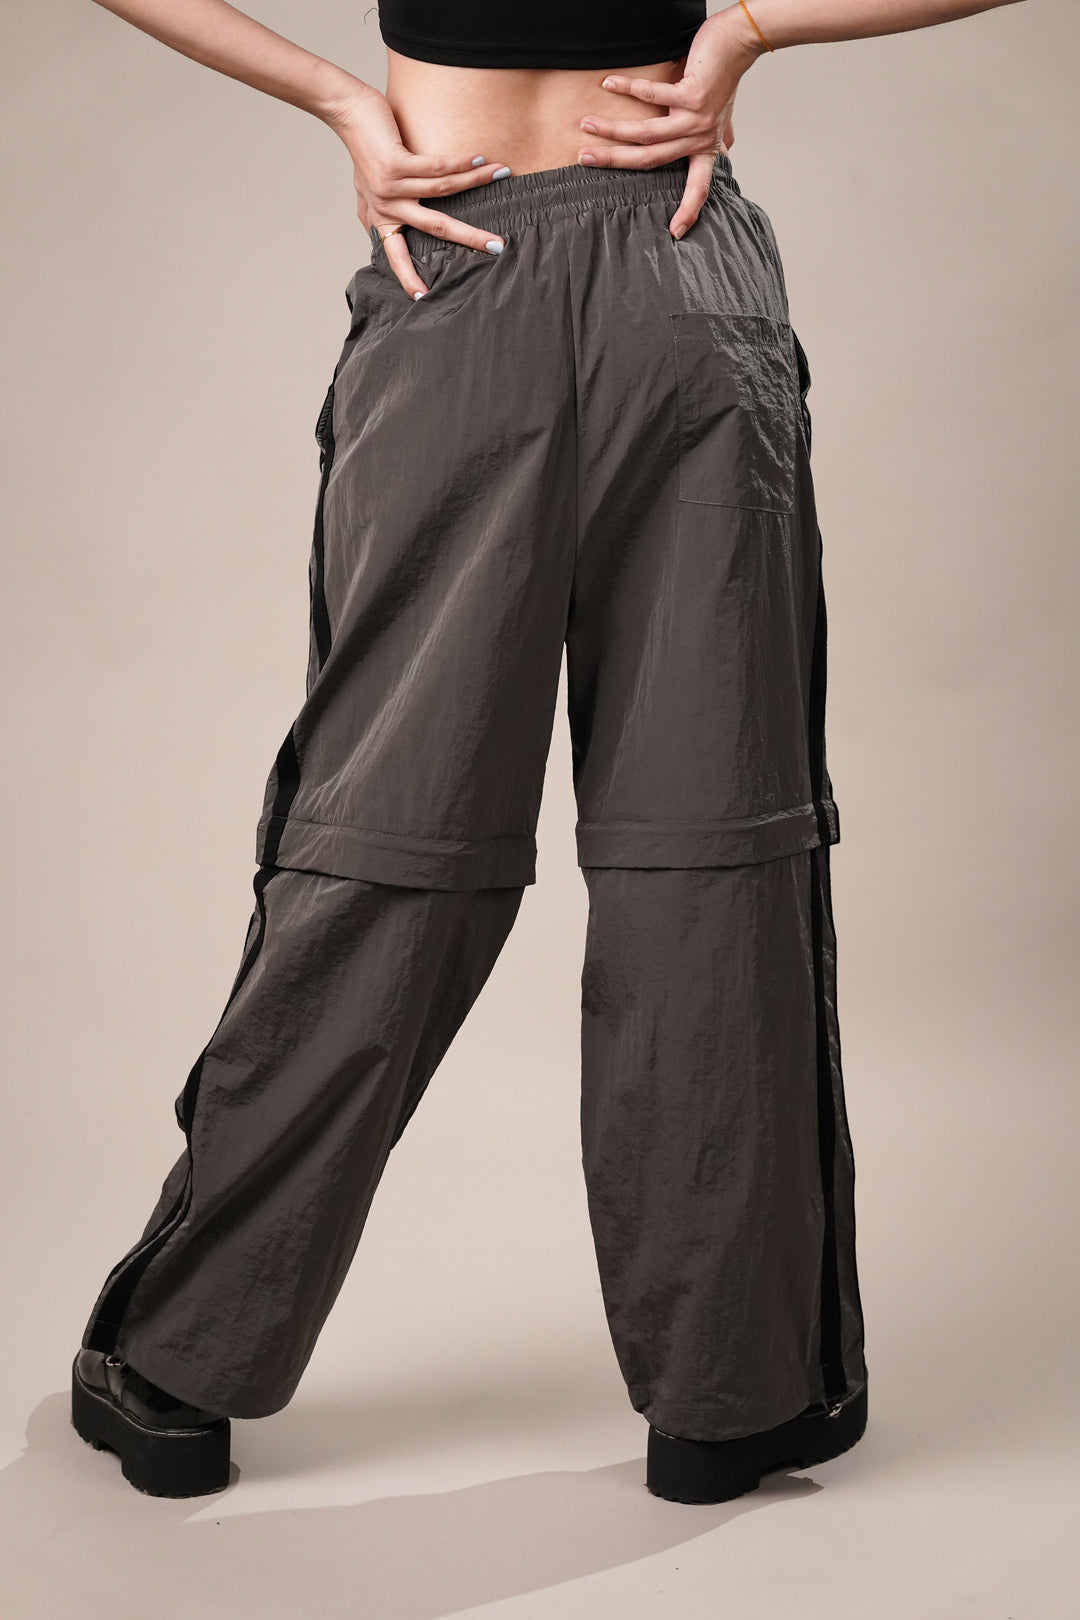 elastic waist relaxed fit loungewear Sweatpants for women